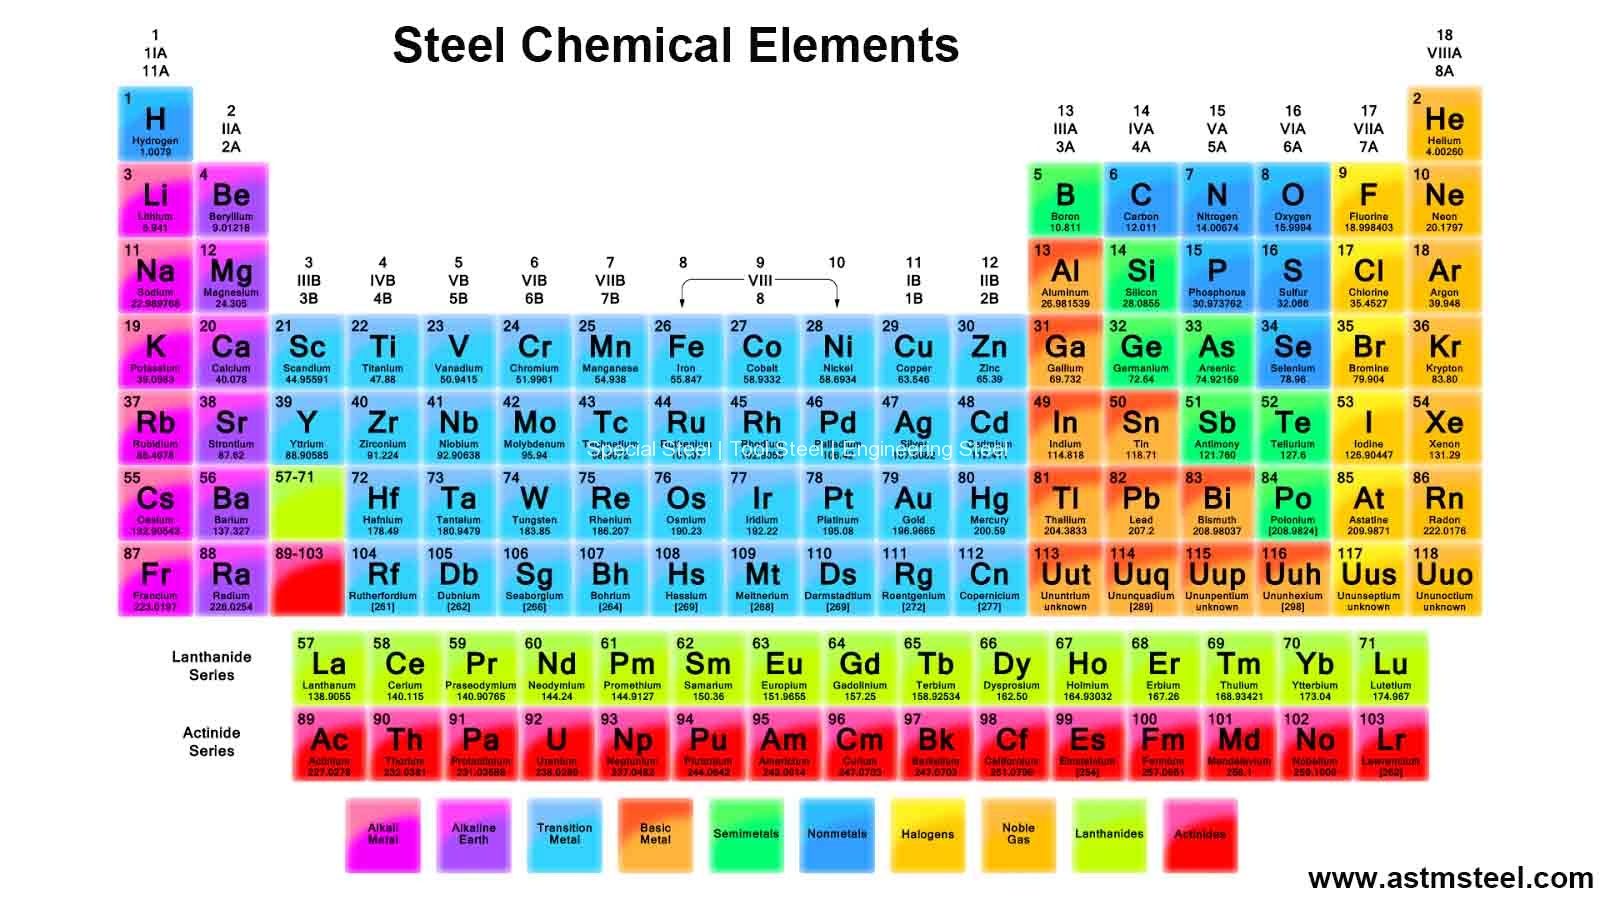 https://www.astmsteel.com/wp-content/uploads/2015/10/Steel-chemical-elements.jpg